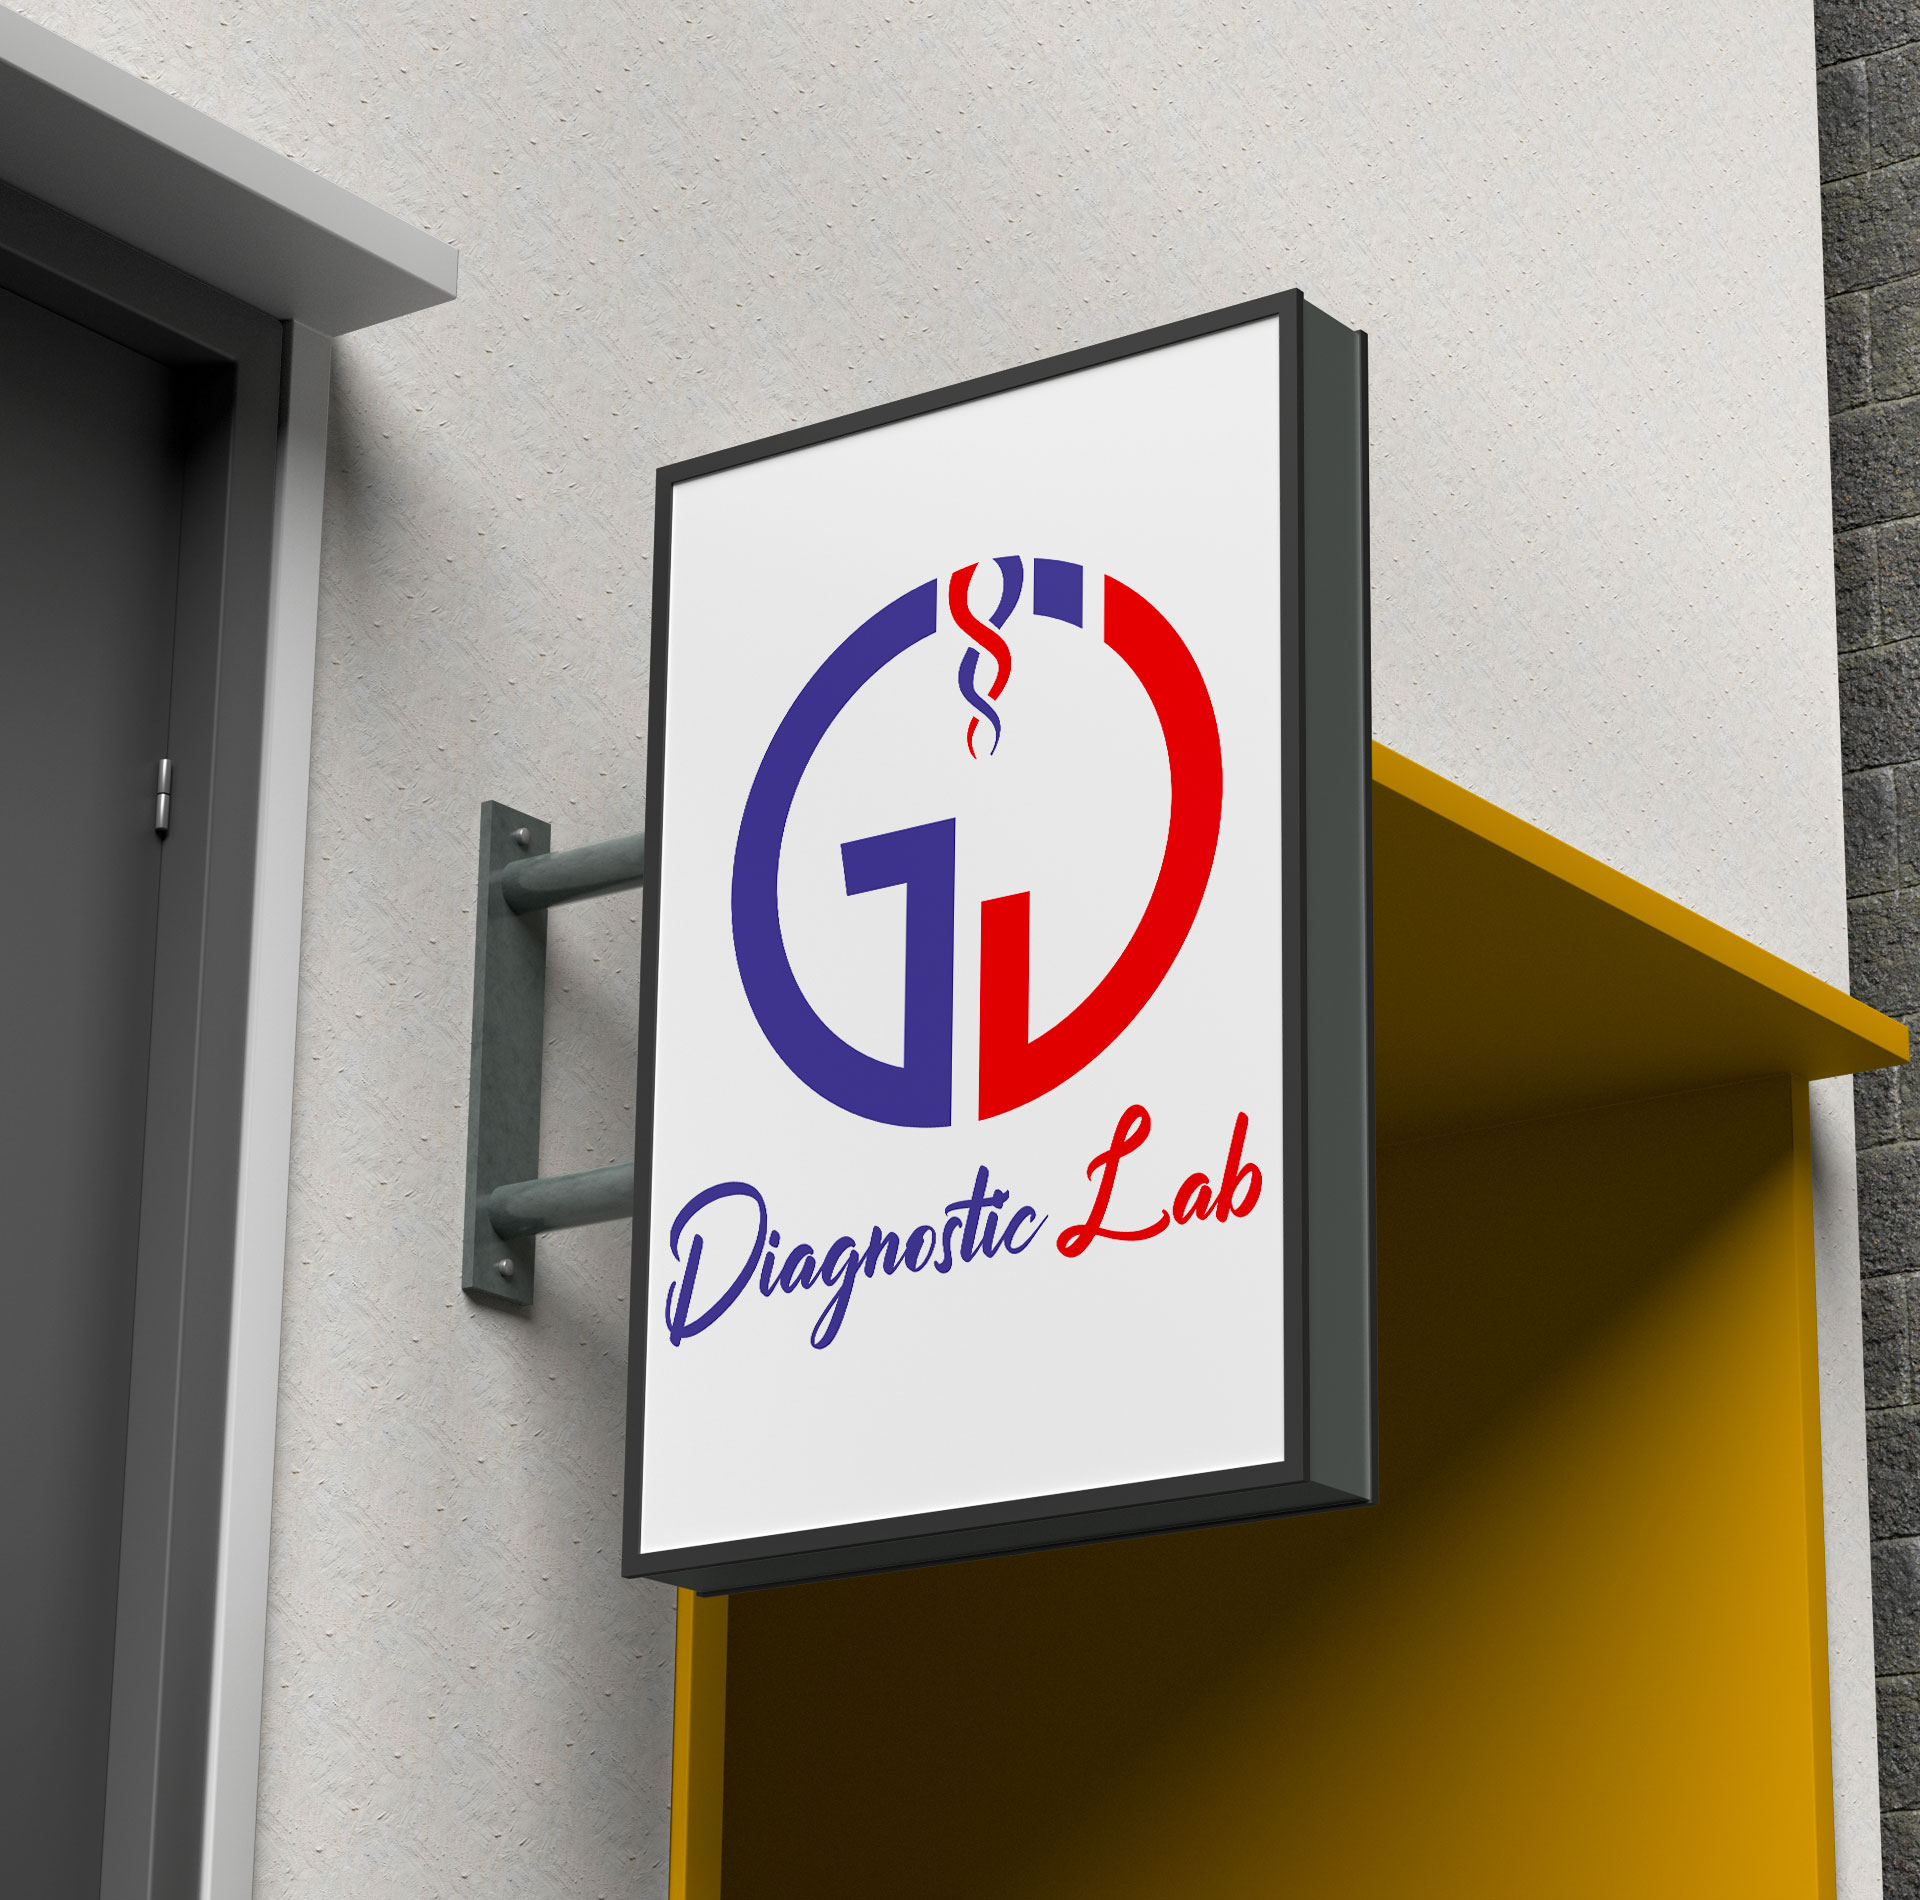 GJ-Diagnostic Lab